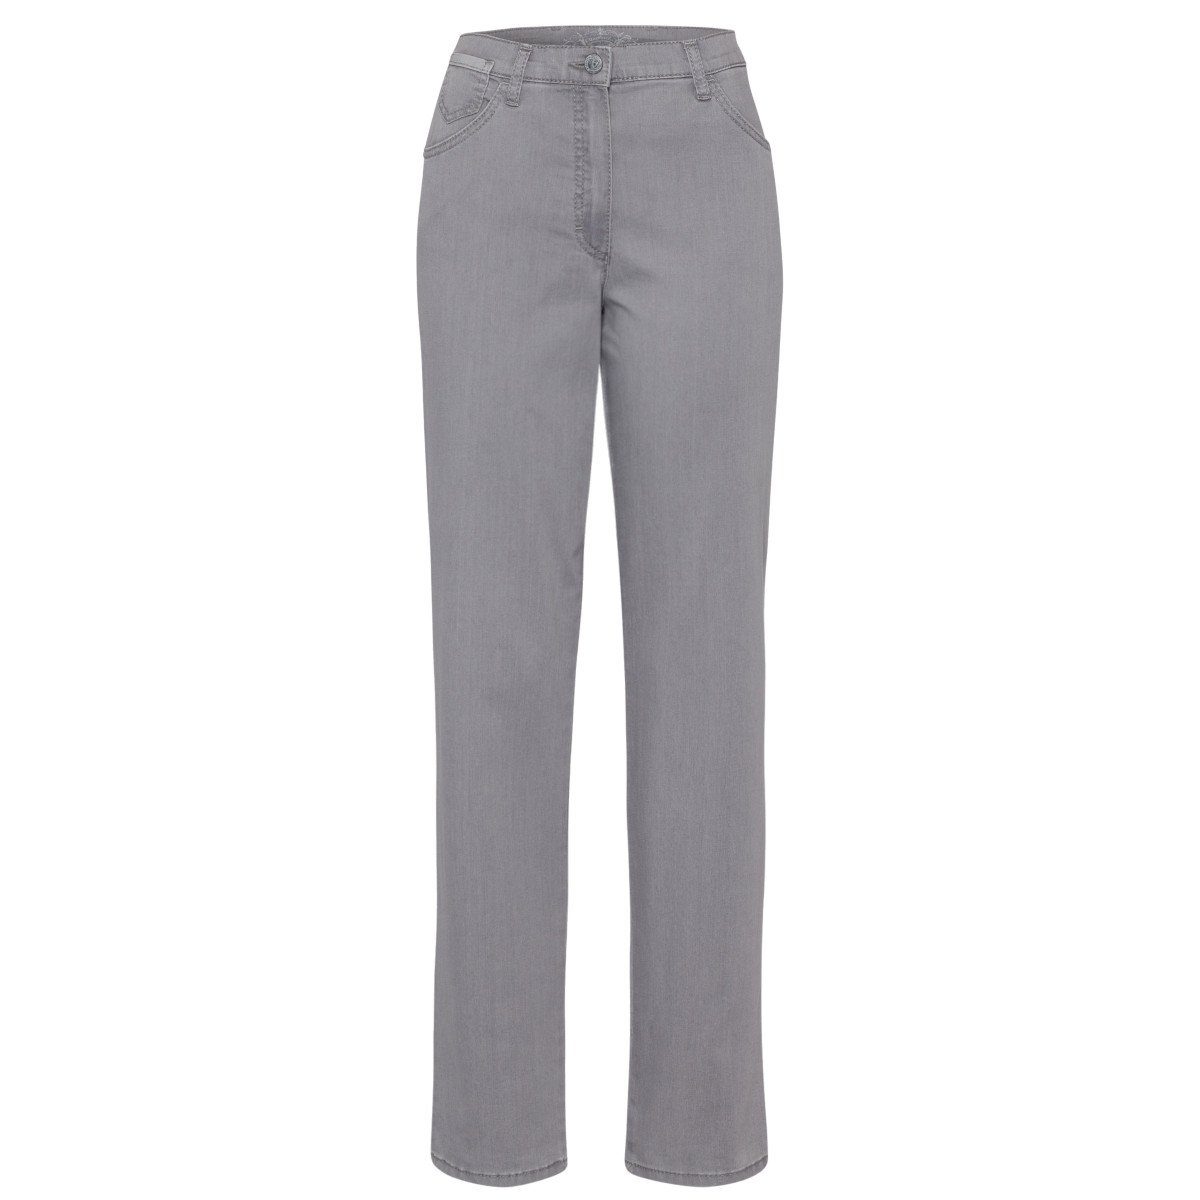 RAPHAELA by BRAX 5-Pocket-Jeans Corry Fay Comfort Plus COMFORT FIT grau (04)